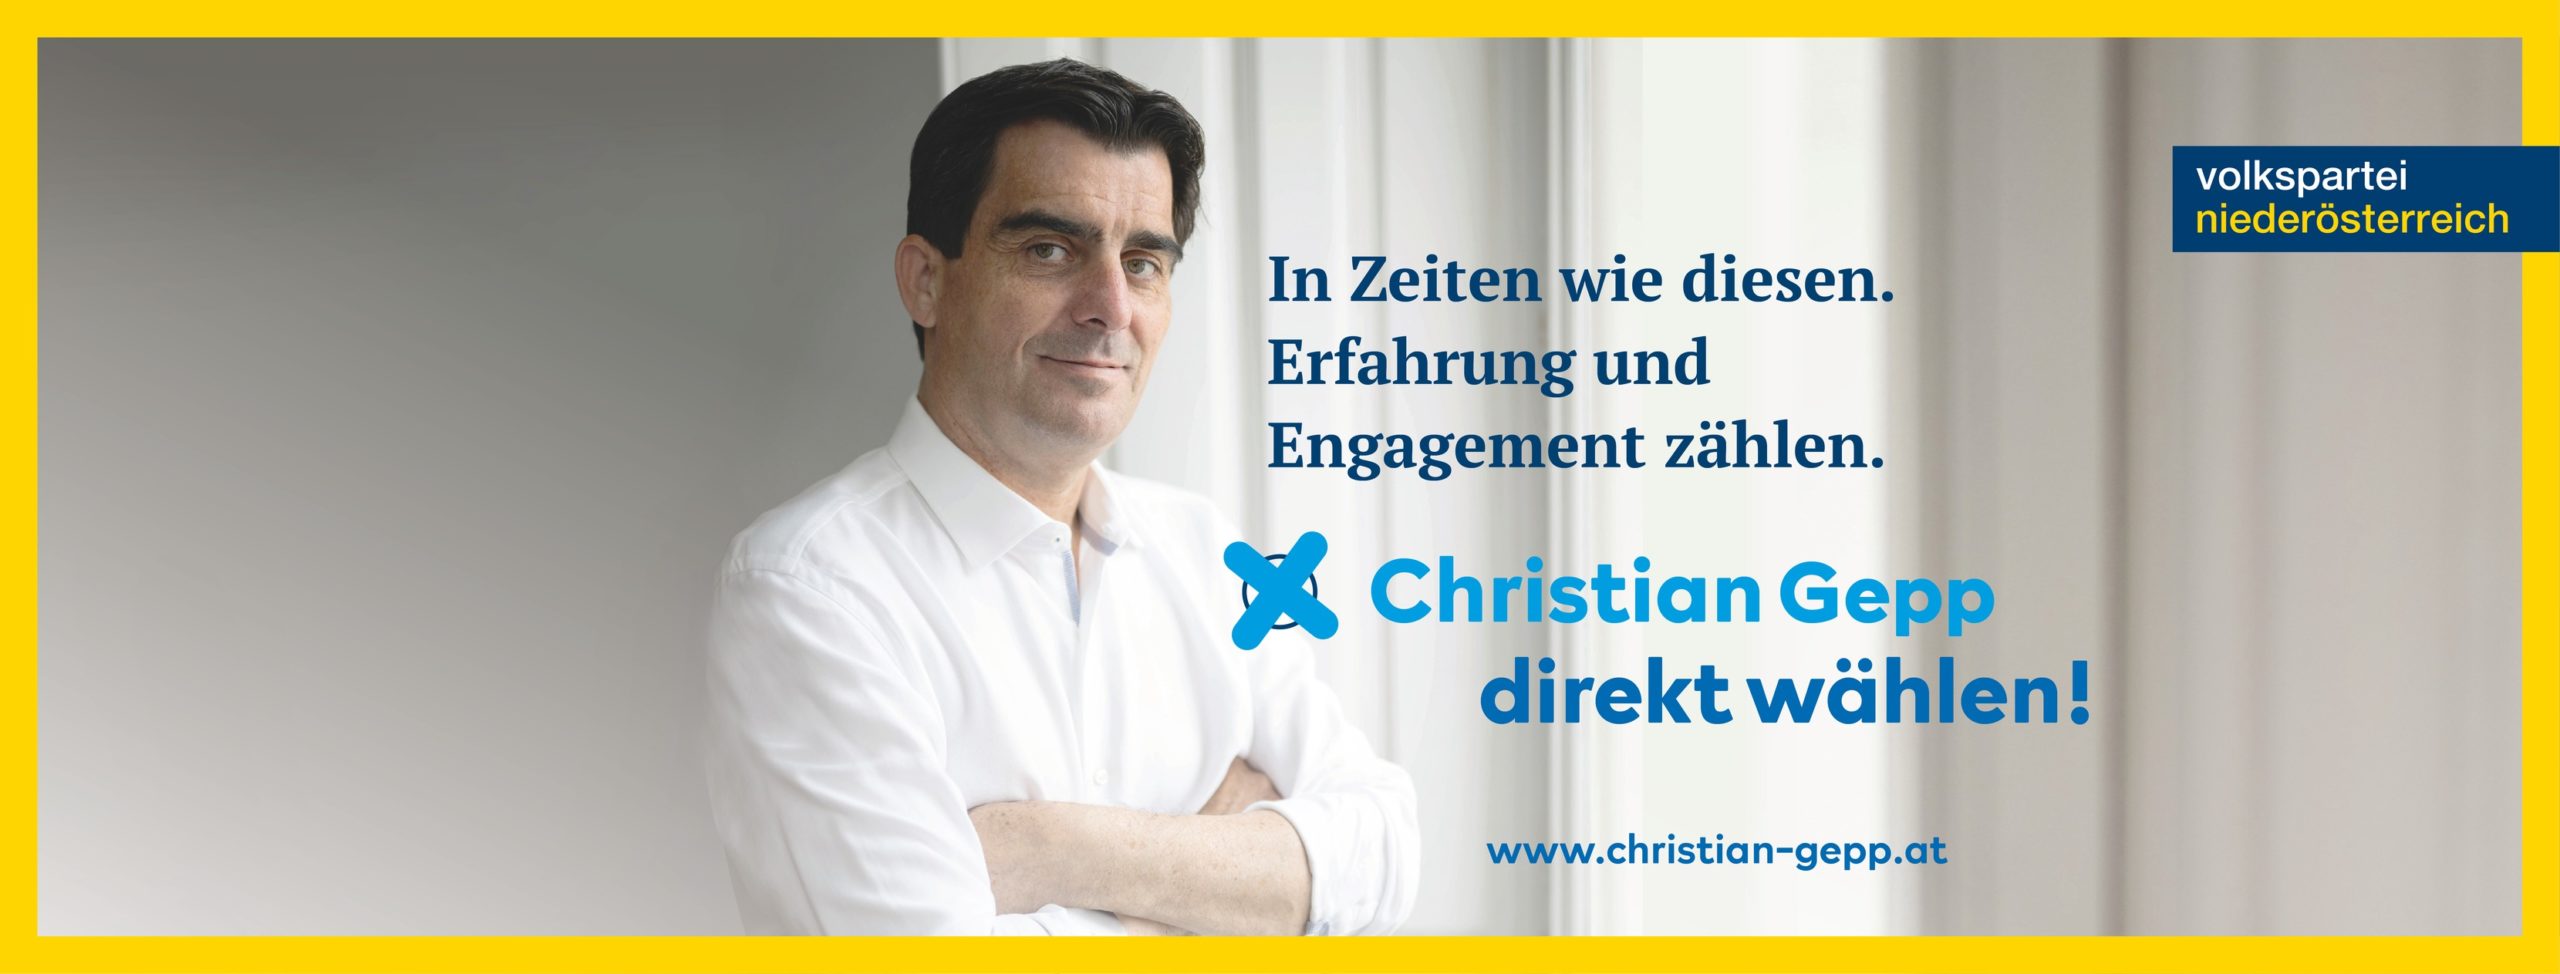 (c) Christian-gepp.at